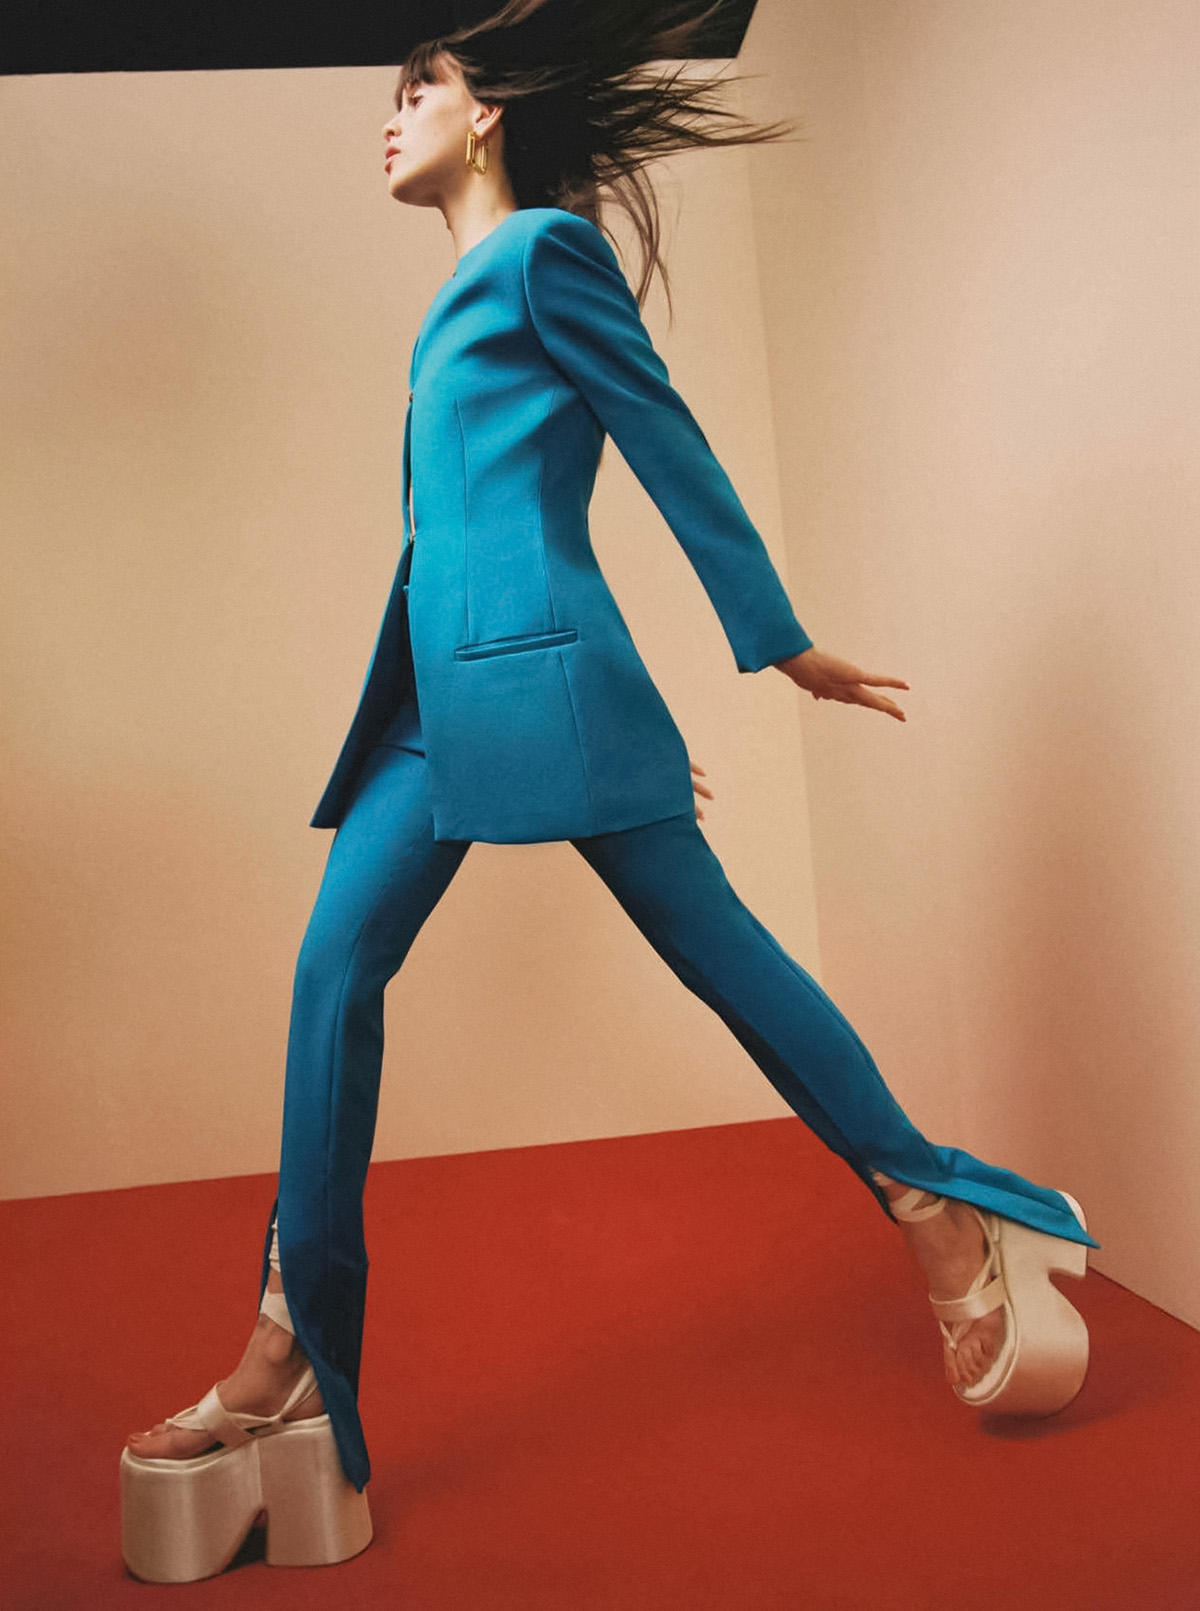 Milena Smit covers Vogue Spain February 2022 by Dan Beleiu